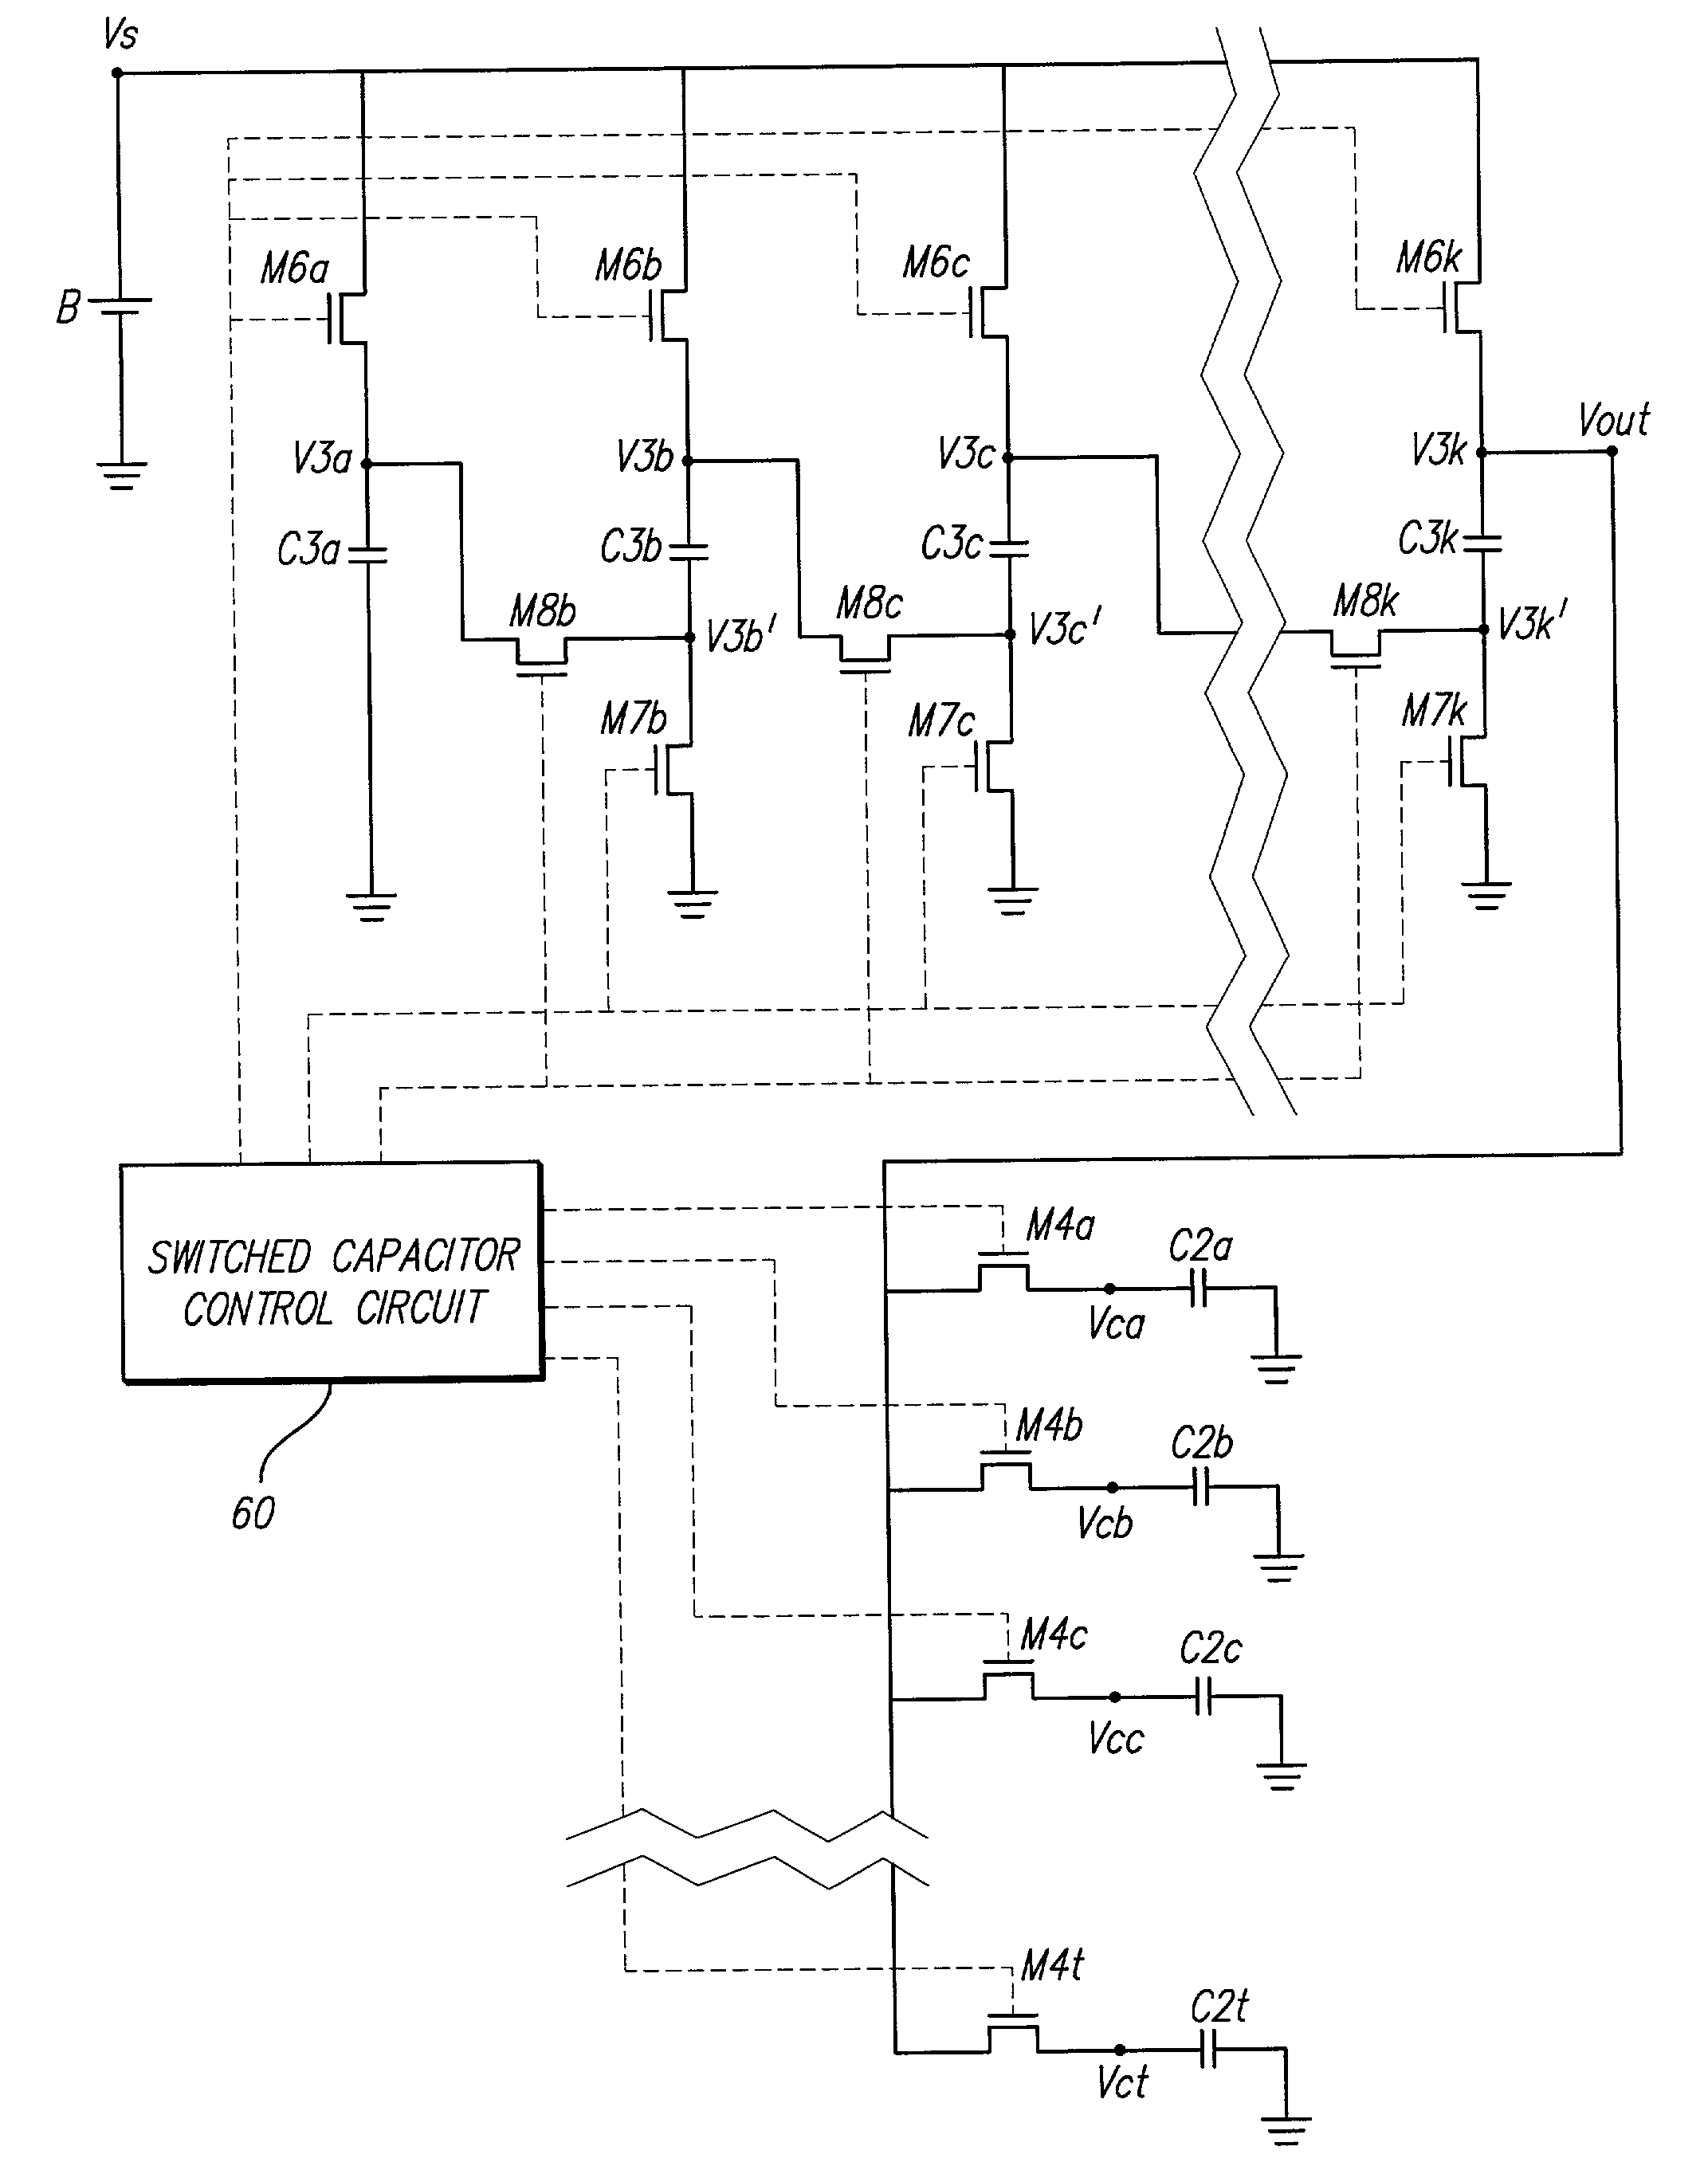 Multi-compliance voltage generator in a multichannel current stimulator